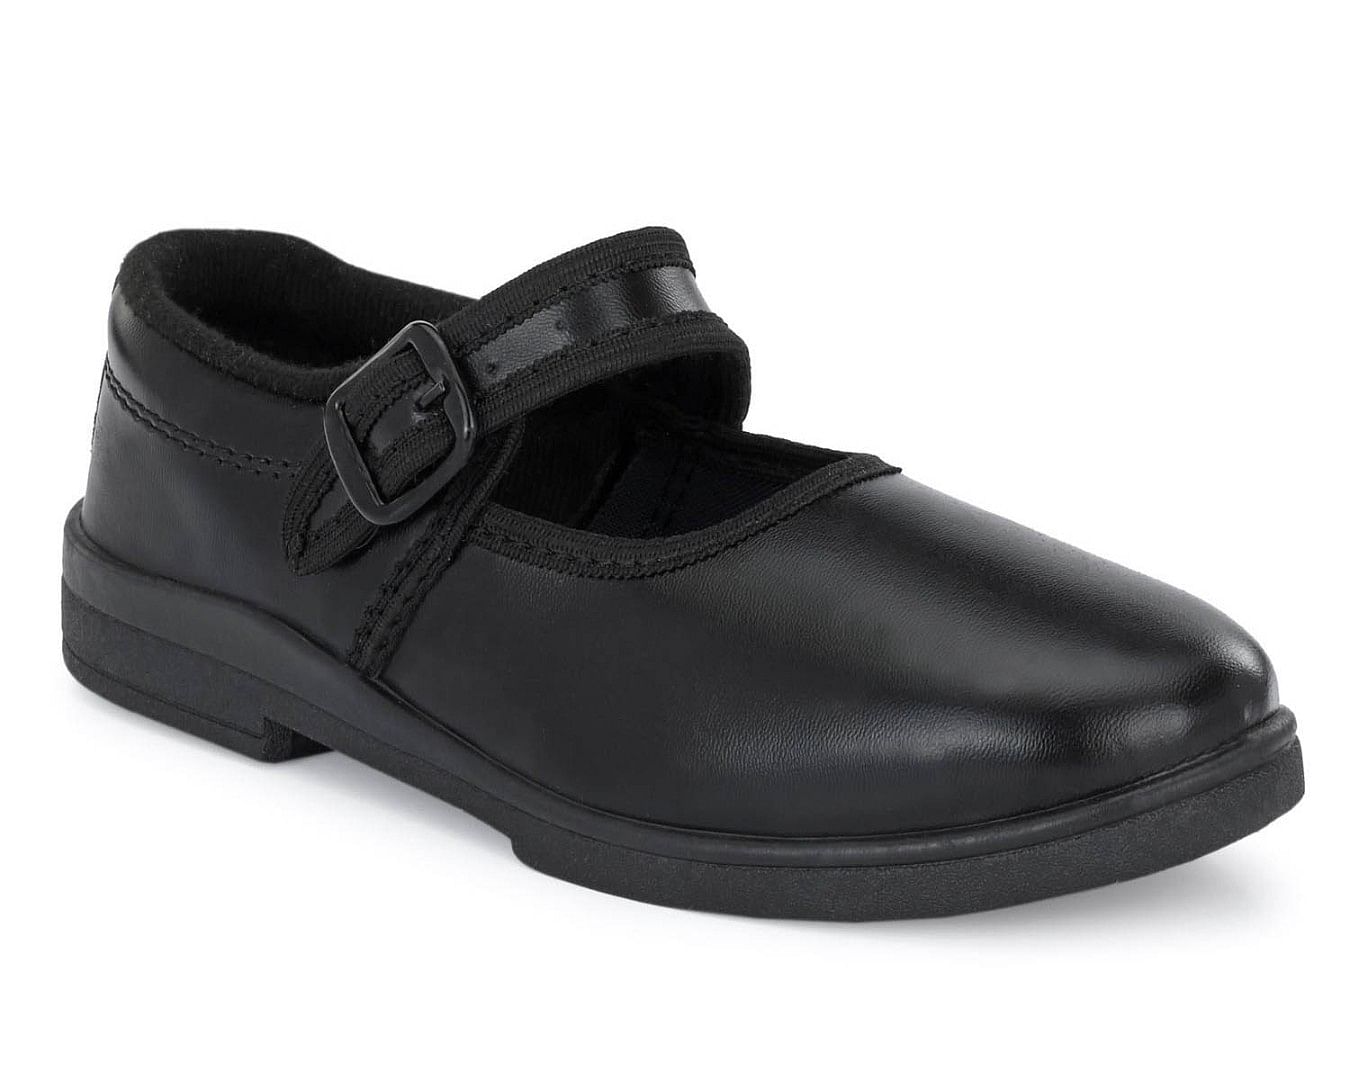 Pair-it Girls PVC School Shoe - 9,10 - Black